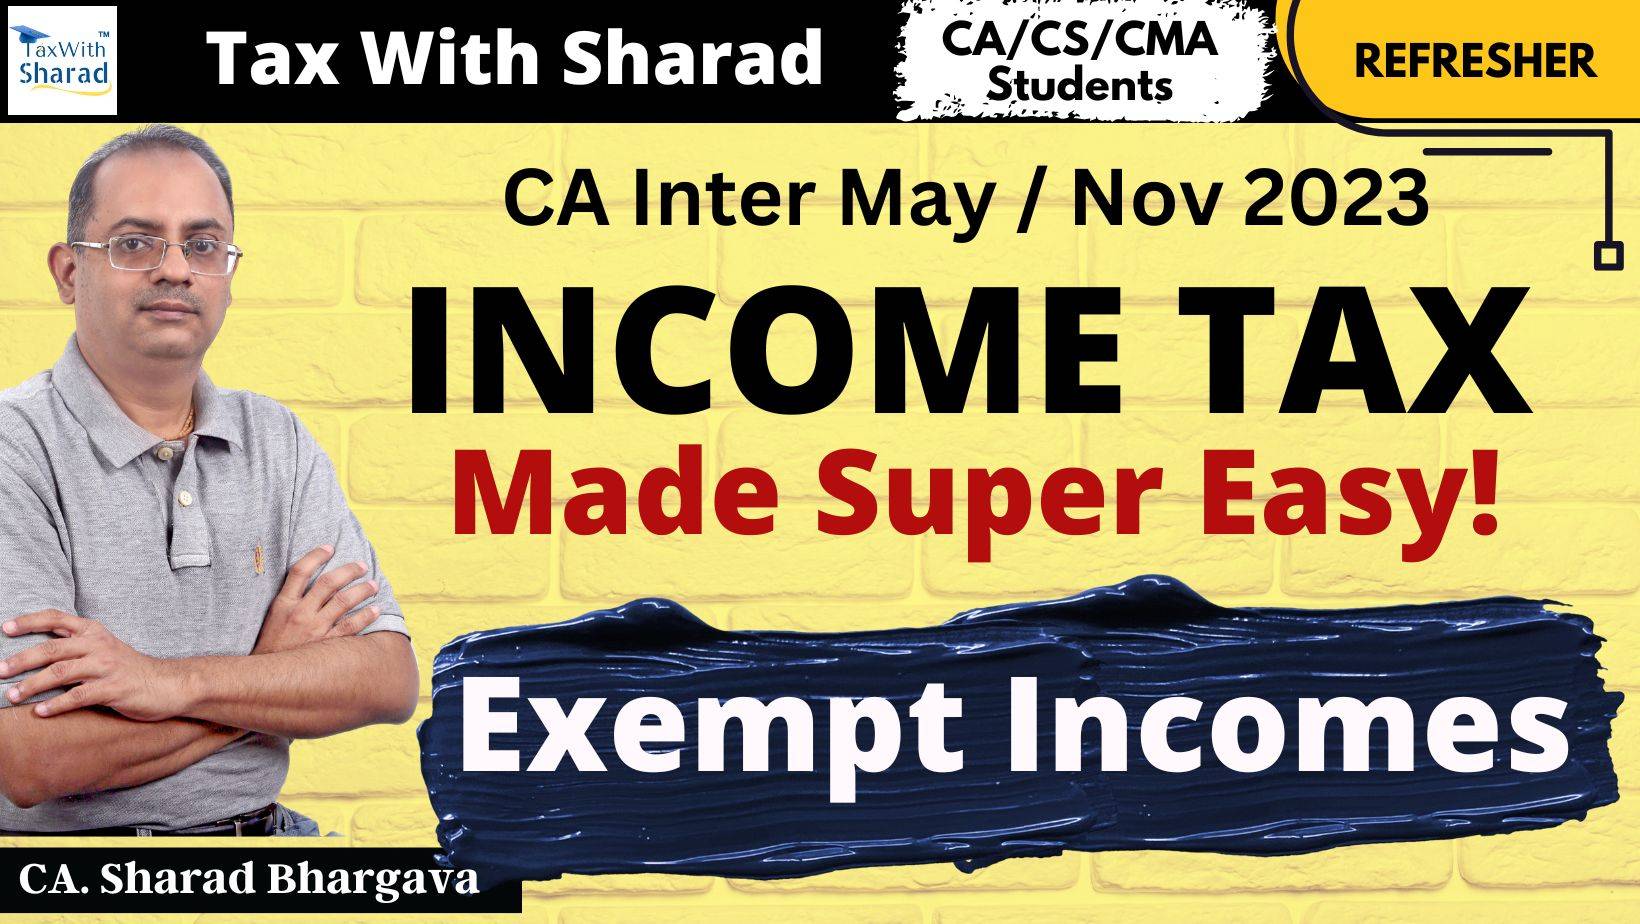 Refresher (DT) / Exempt Incomes / CA Inter May/Nov 2023 / CA. Sharad Bhargava